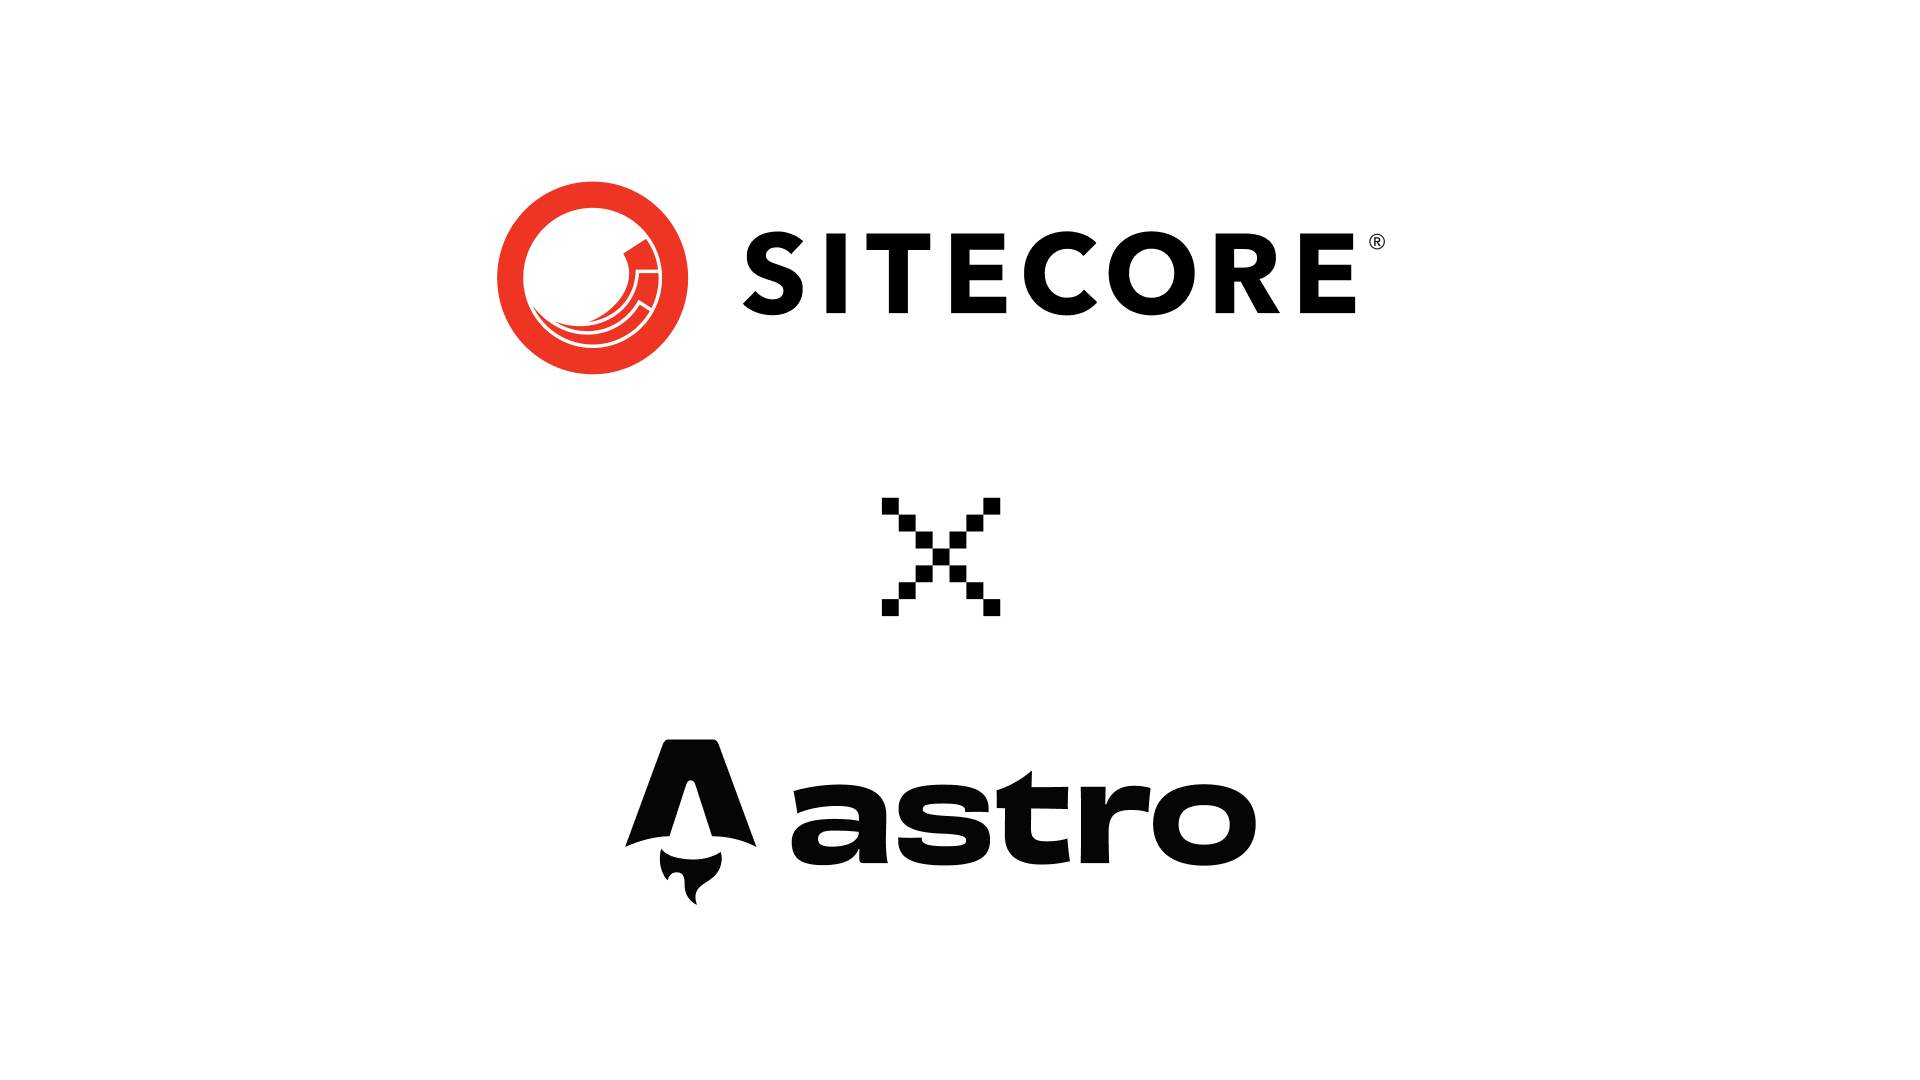 Cover Image for Sitecore JavaScript Software Development Kit for Astro